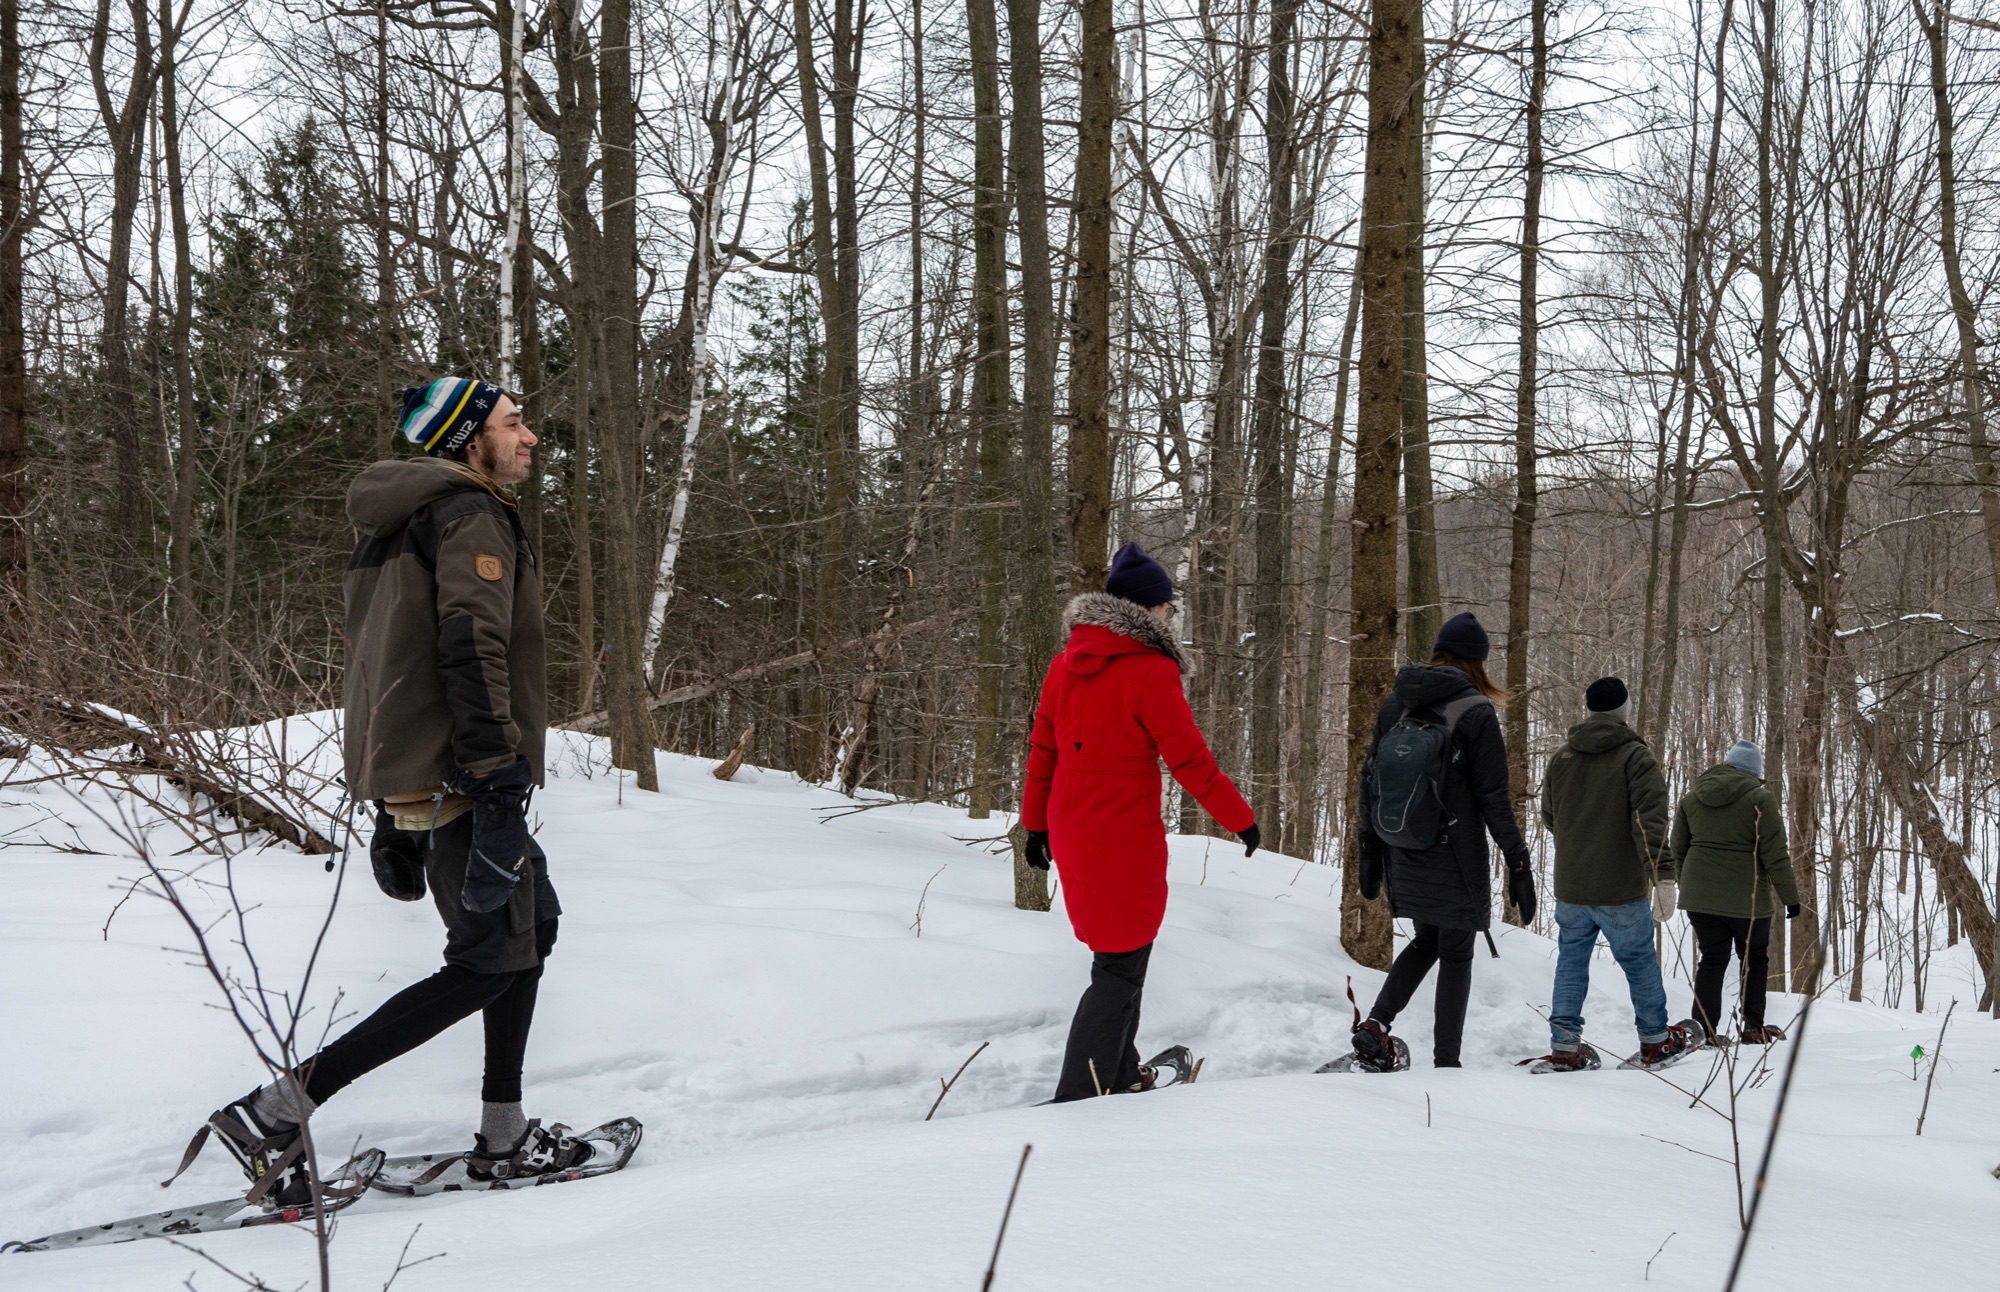 Daytime snowshoe excursion – The Joy of Winter